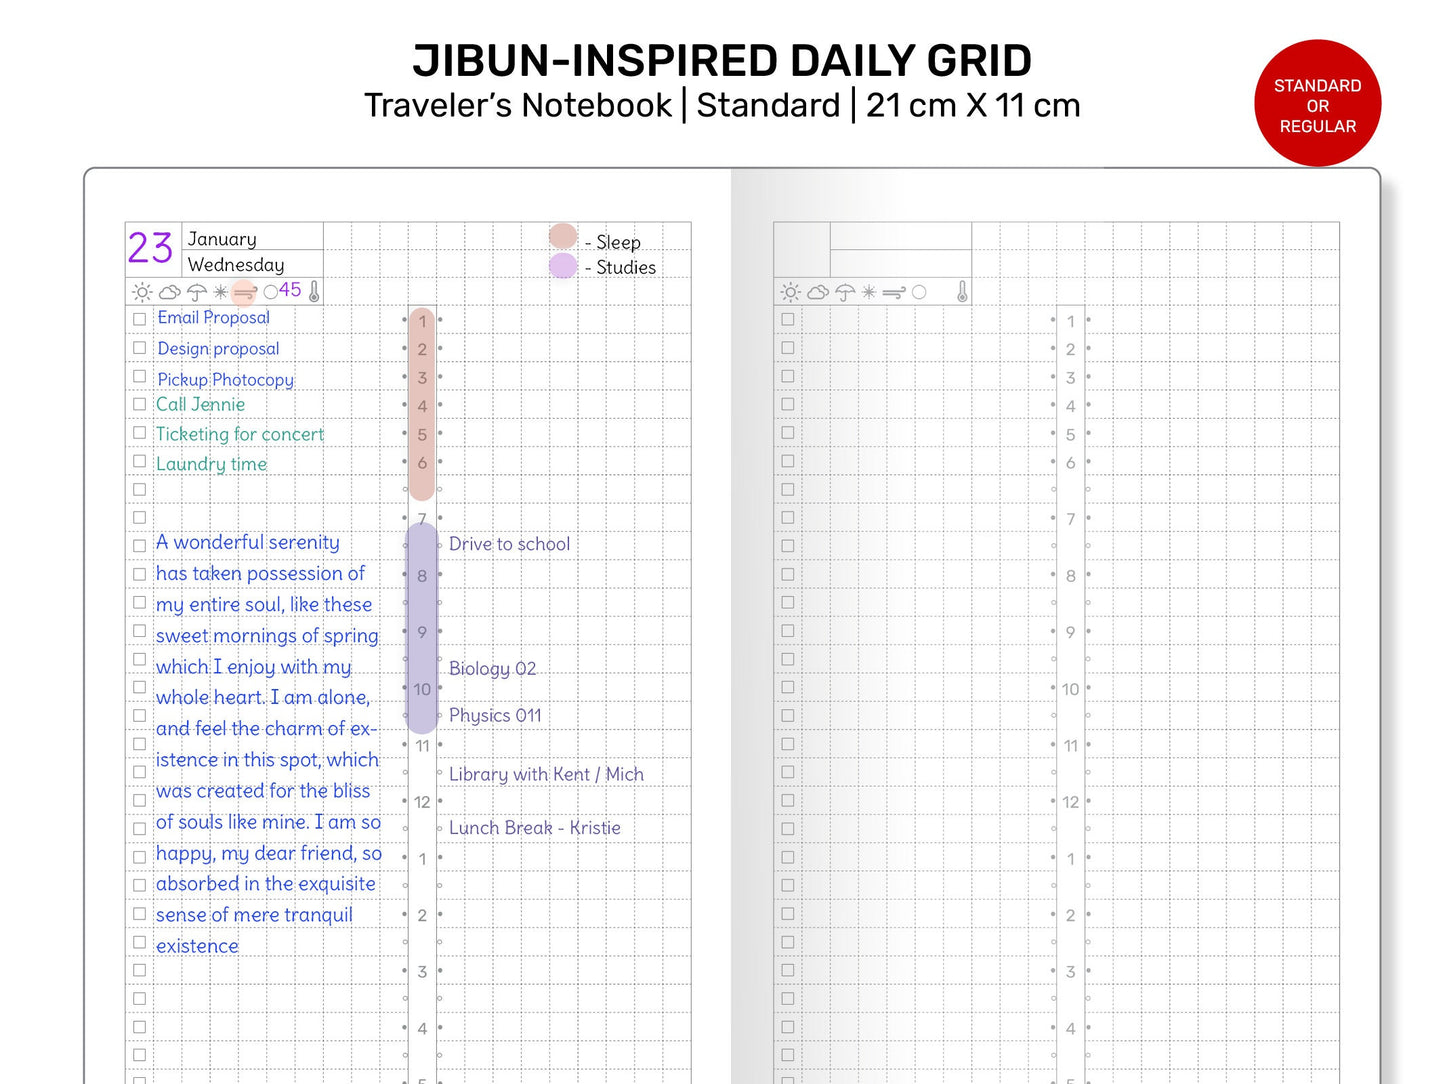 B6 Daily JIBUN-Inspired Printable Traveler's Notebook Insert Minimalist GRID B6033